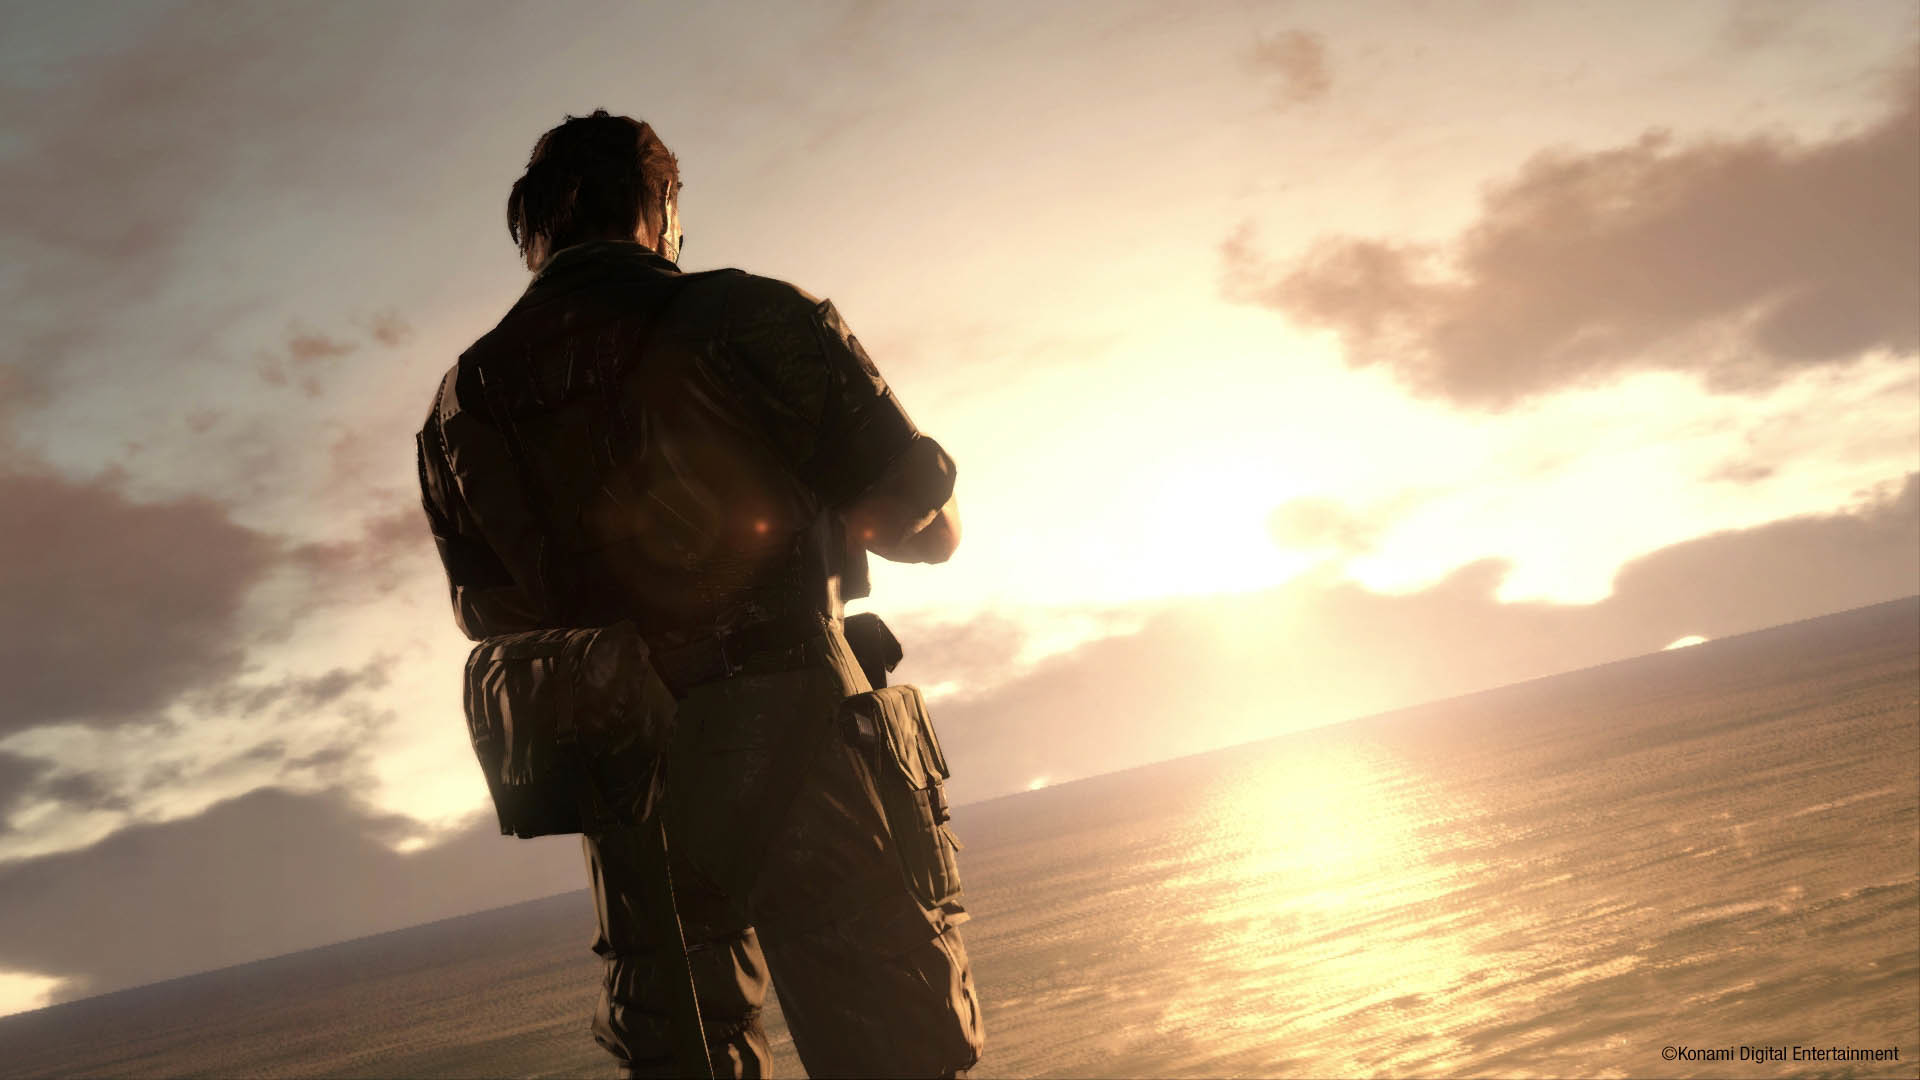 Big Boss at Sunrise – Metal Gear Solid V The Phantom Pain wallpaper